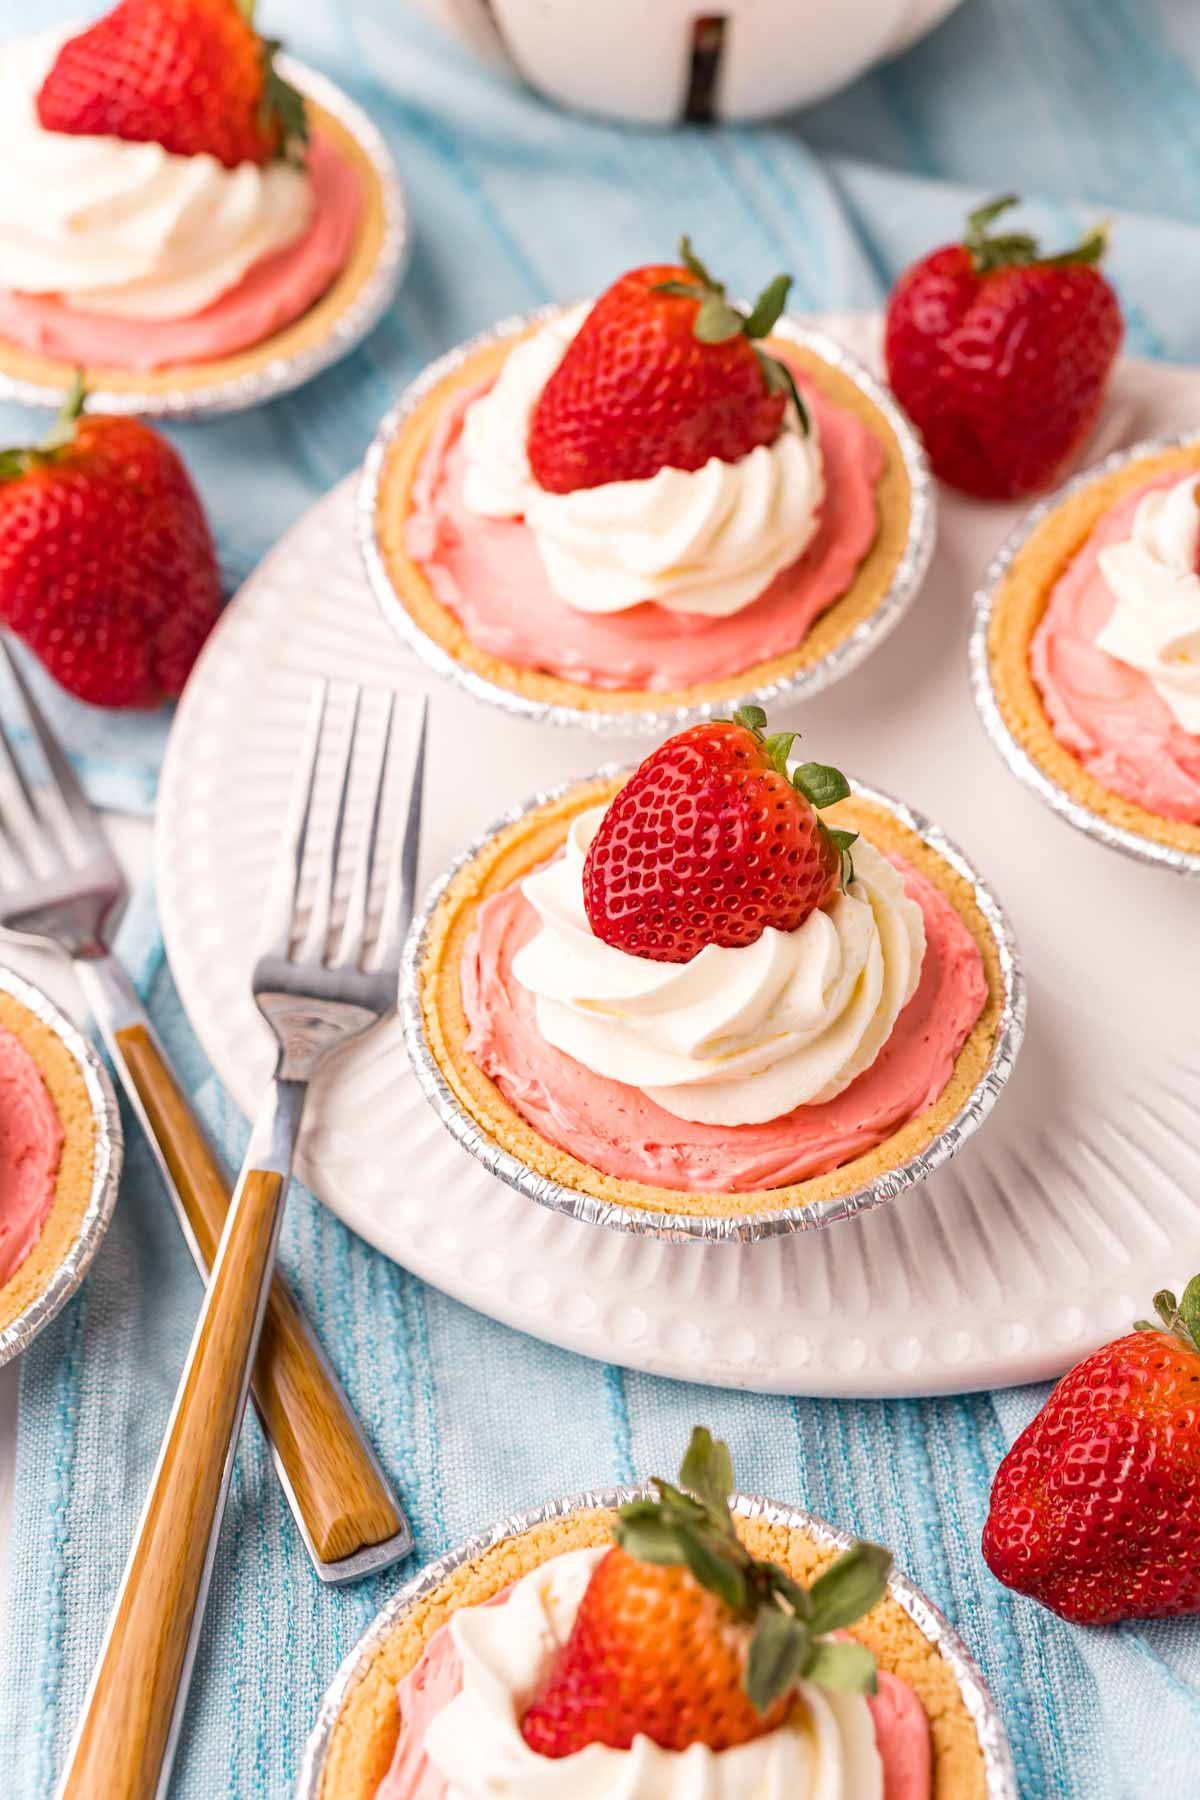 mini kool-aid pies with strawberries on top